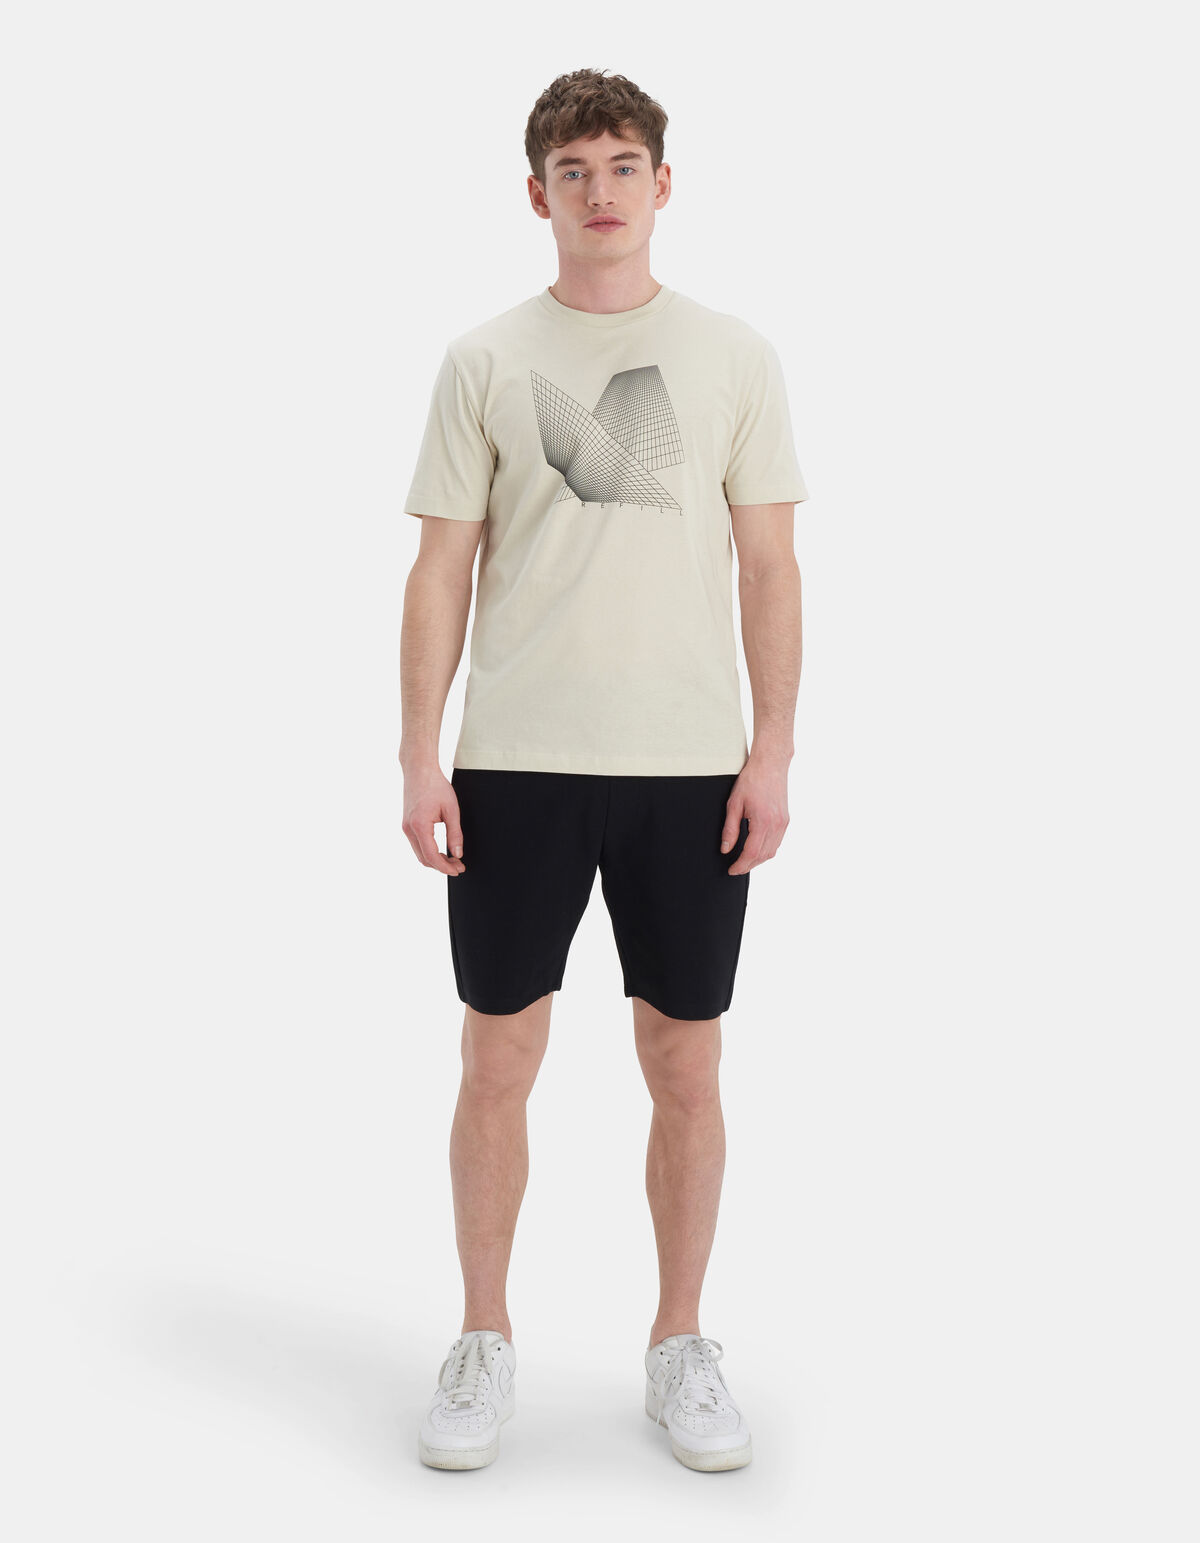 Illusion T-shirt REFILL